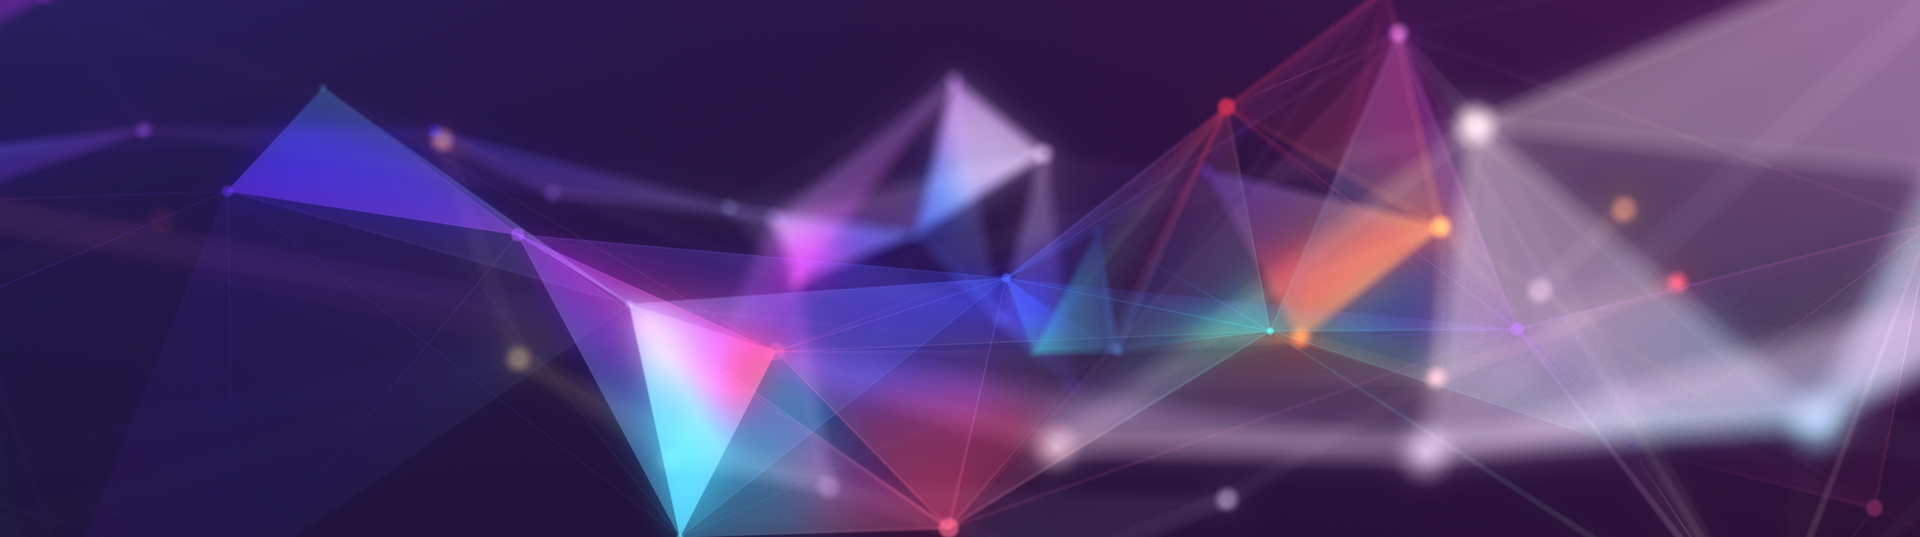 Prism background